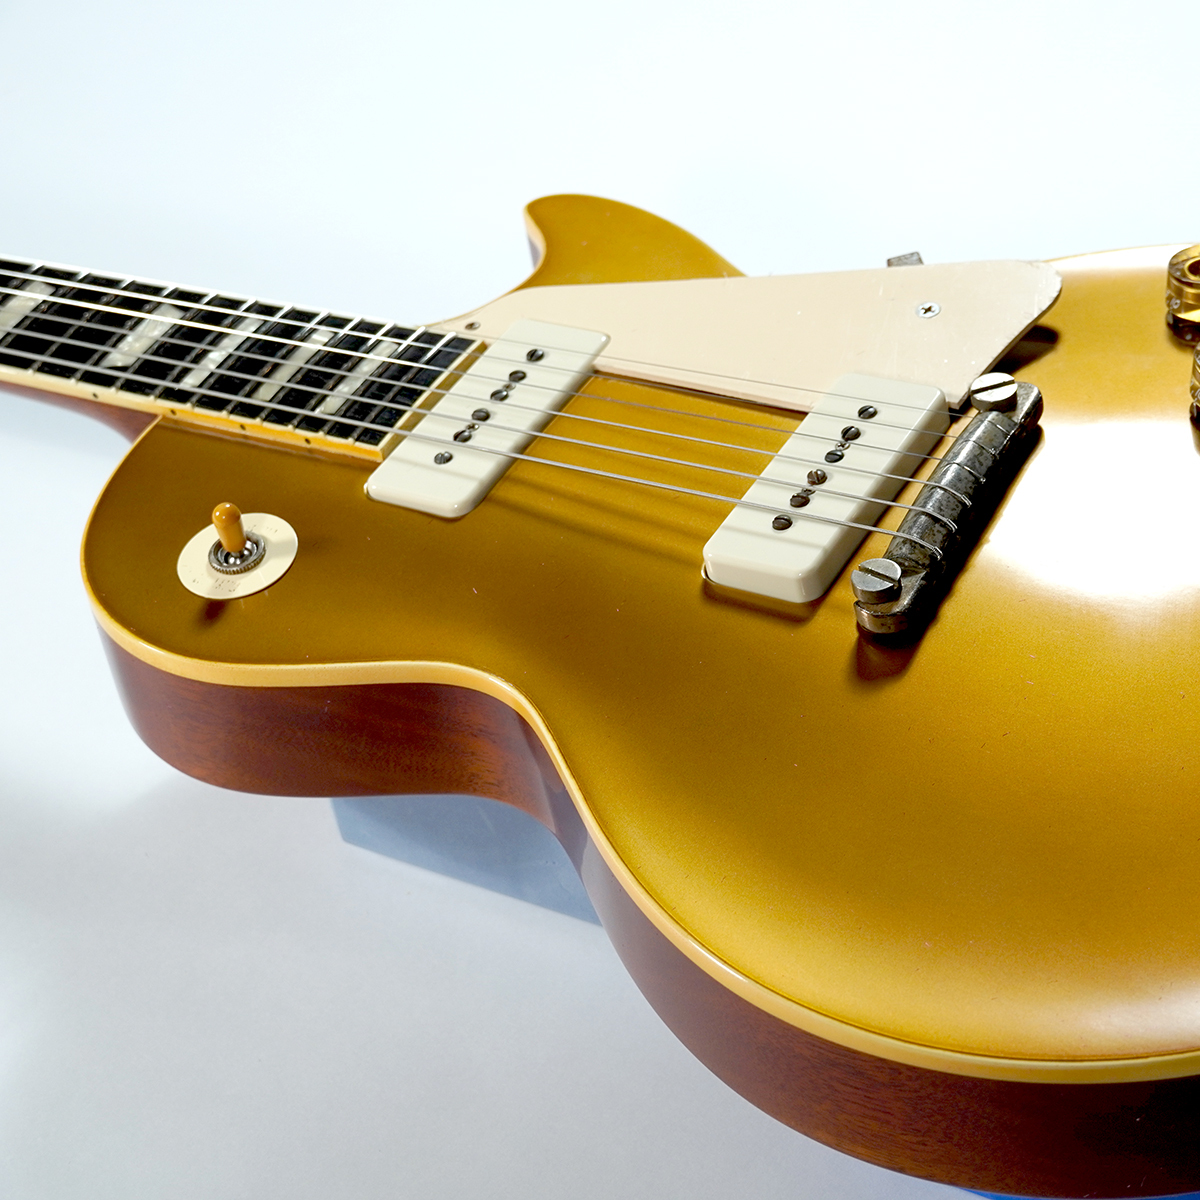 g7 Special Goldtop 画像 - エレキギター